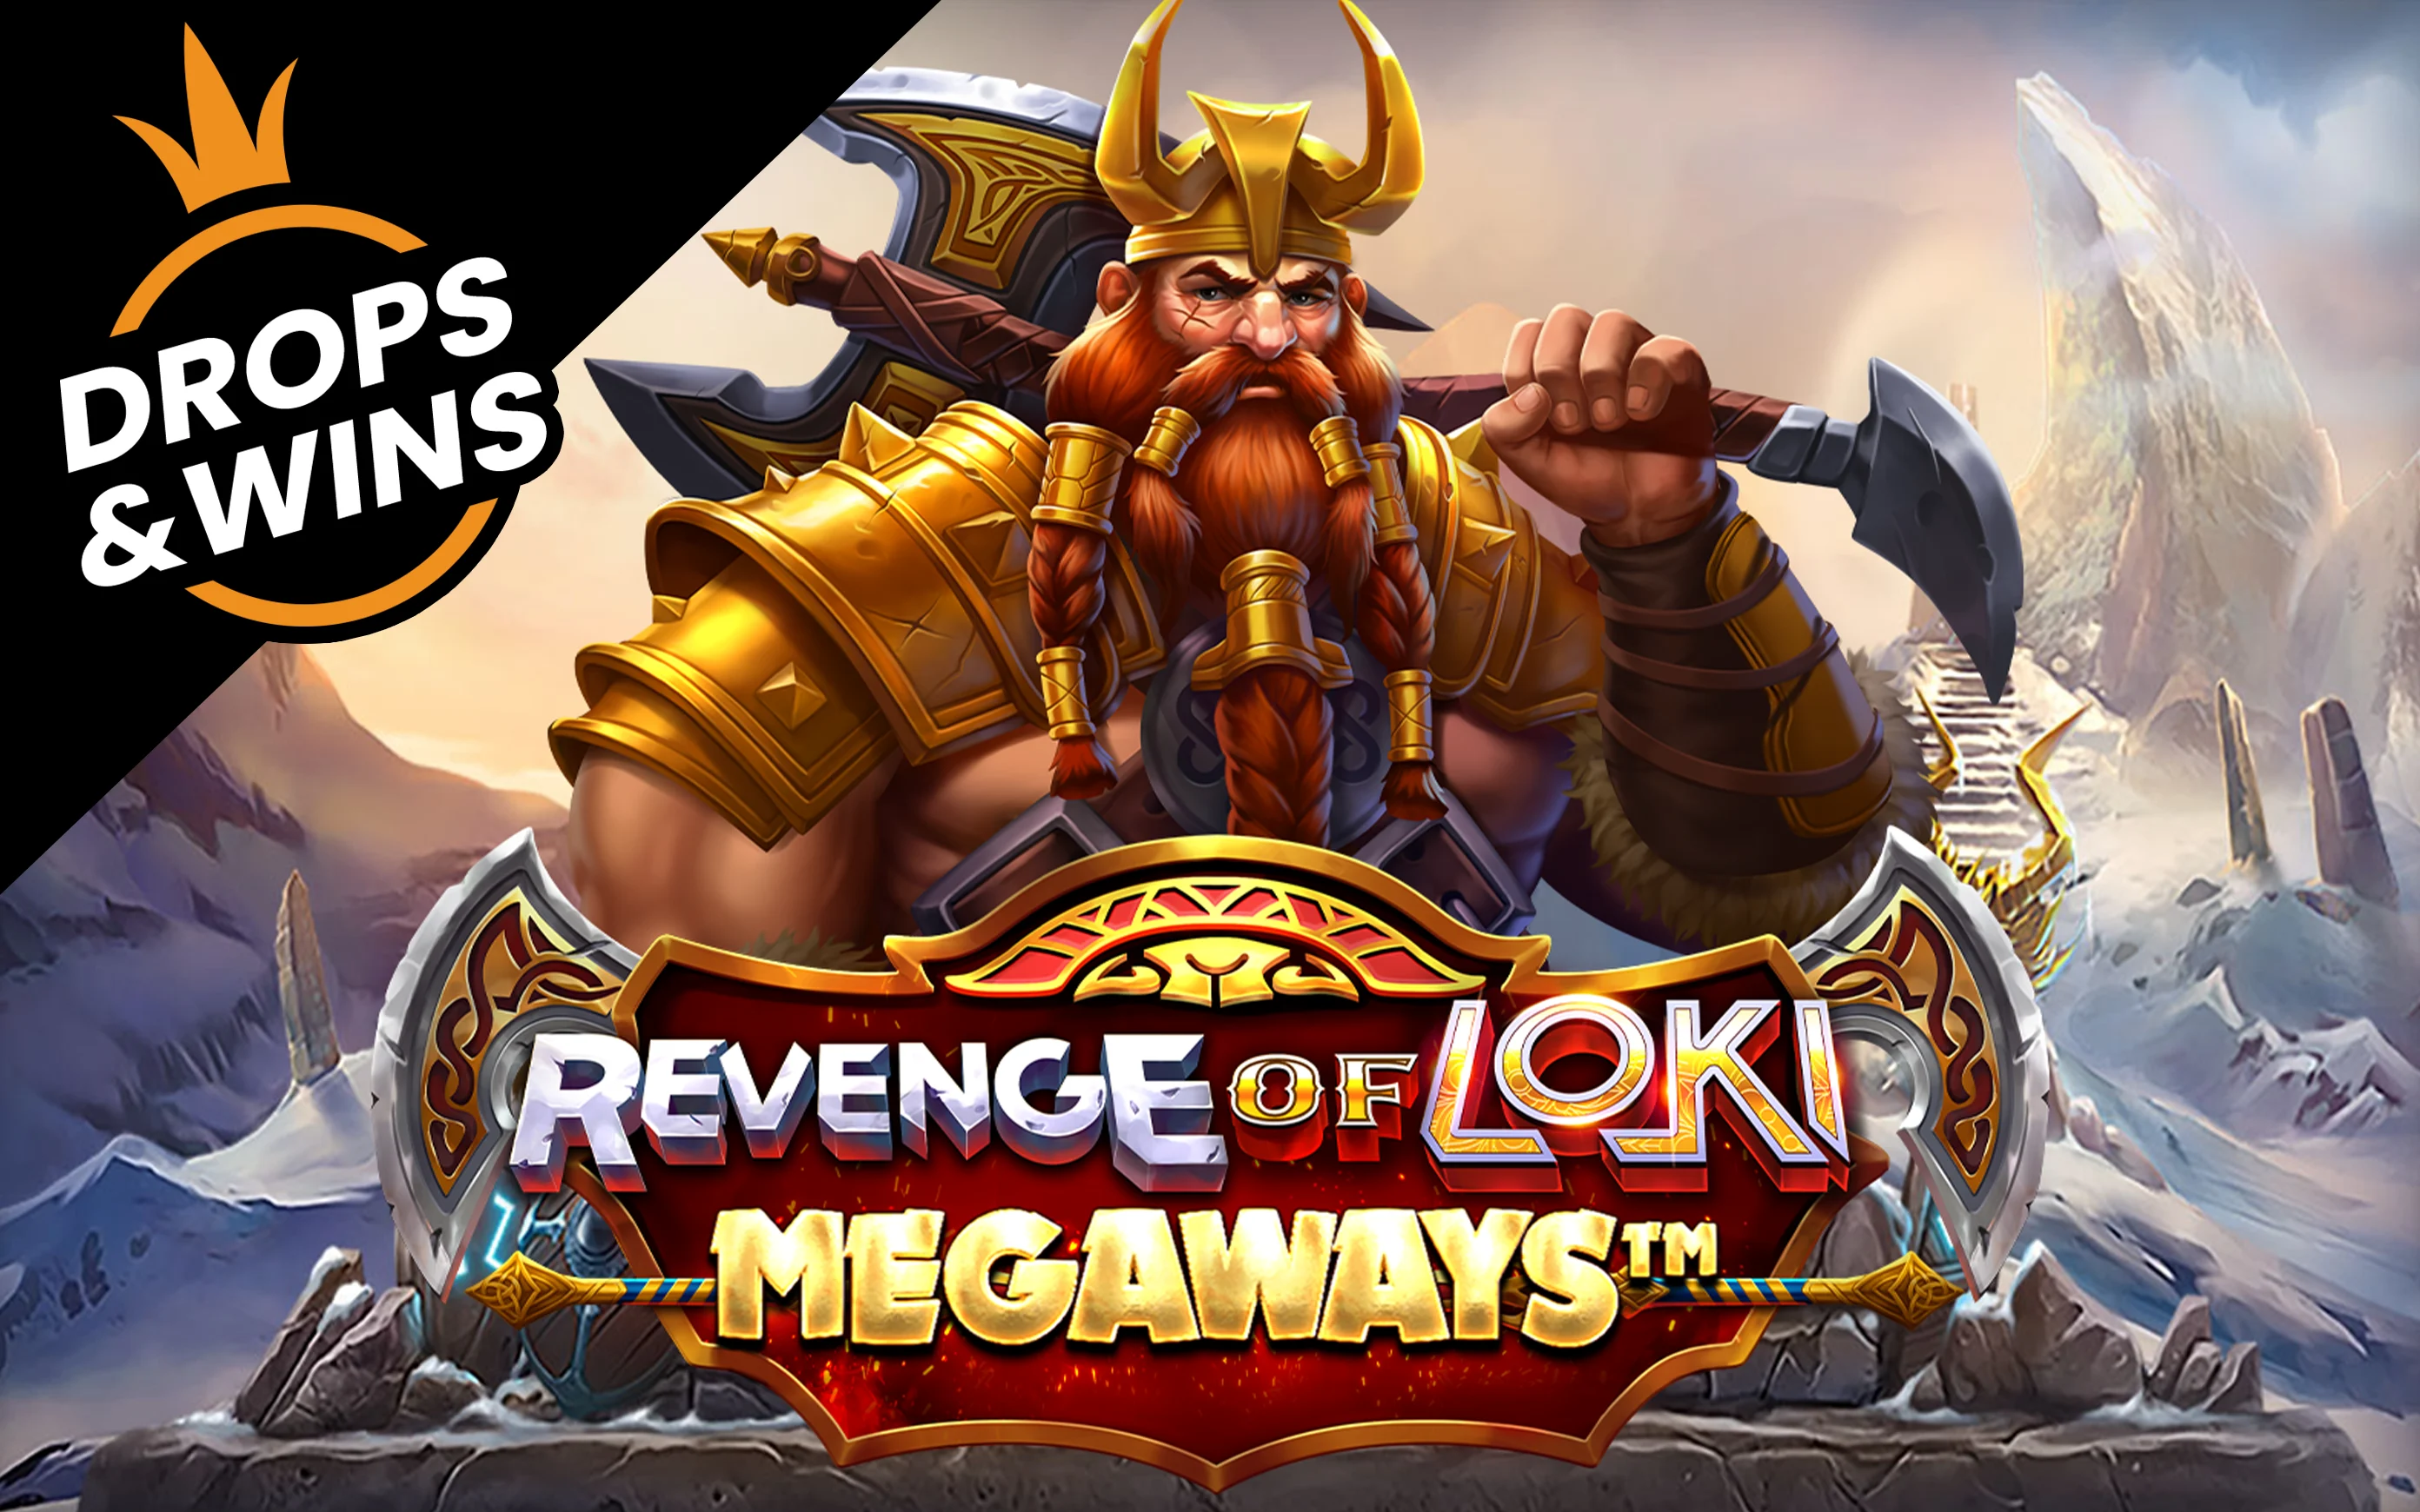 Play Revenge of Loki Megaways on Starcasino.be online casino